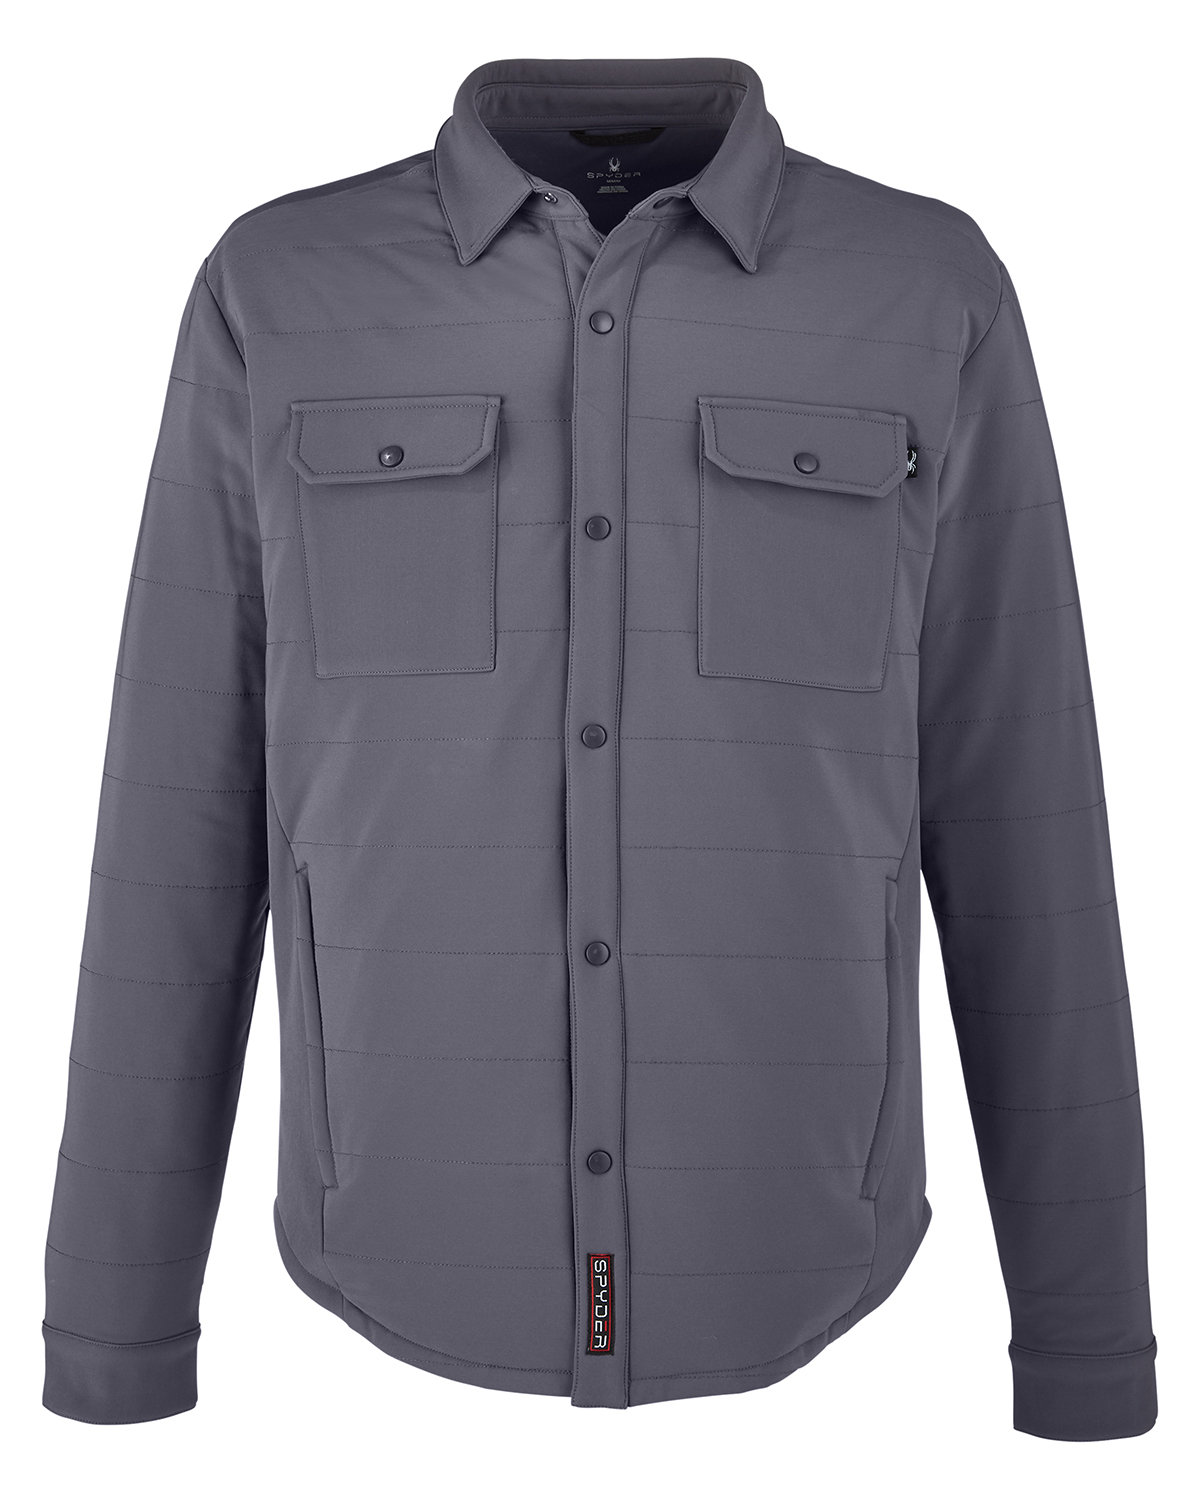 Spyder S17030 - Adult Transit Shirt Jacket